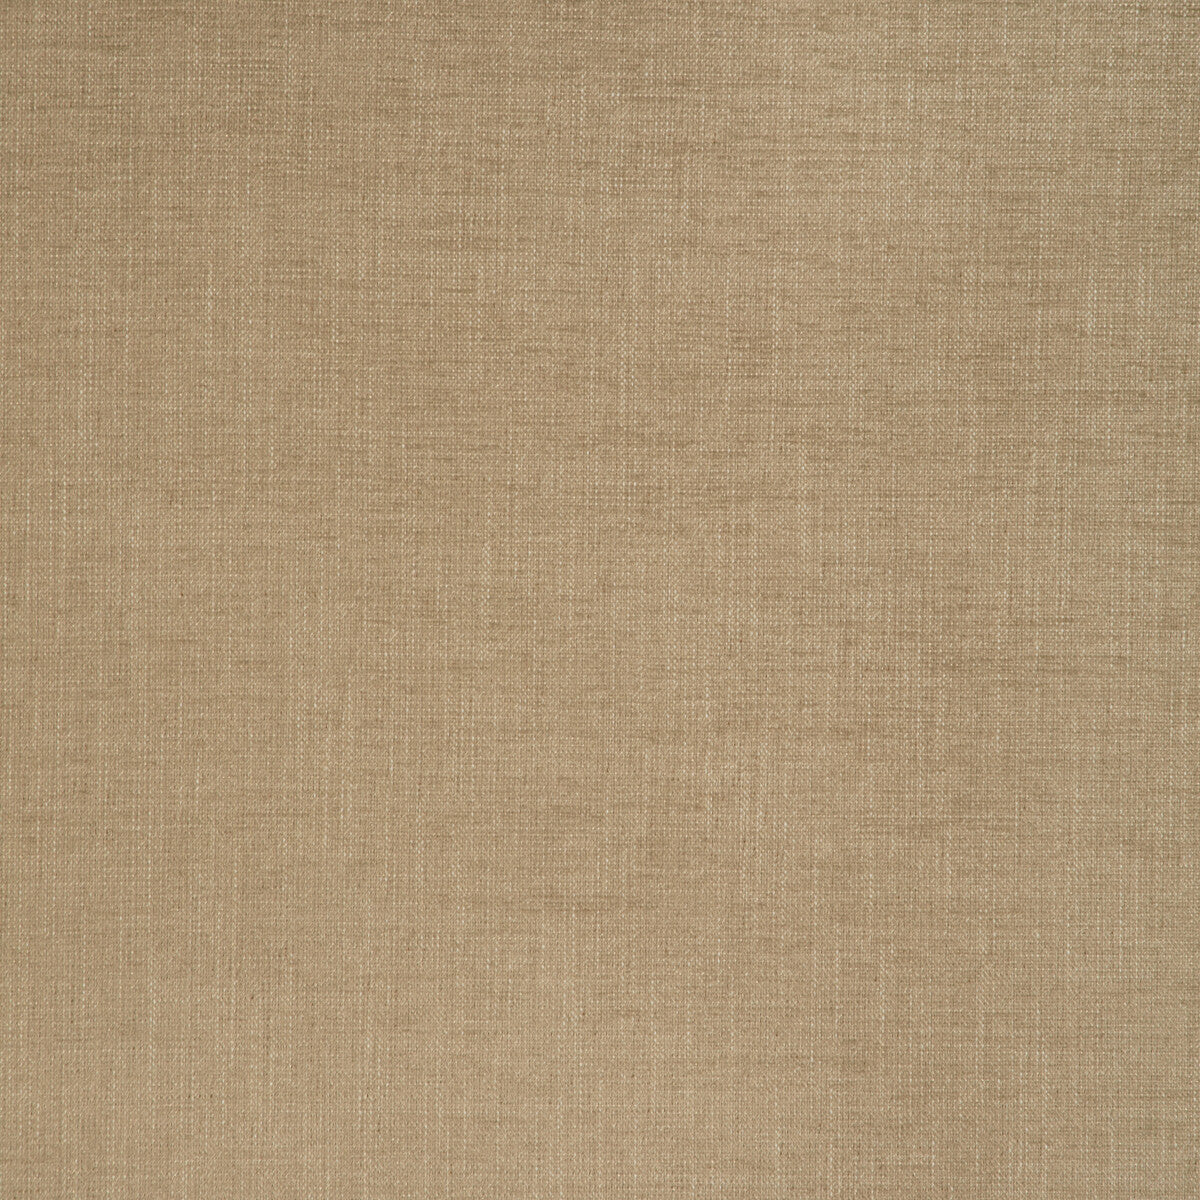 Poet Plain fabric in camel color - pattern 36649.16.0 - by Kravet Basics